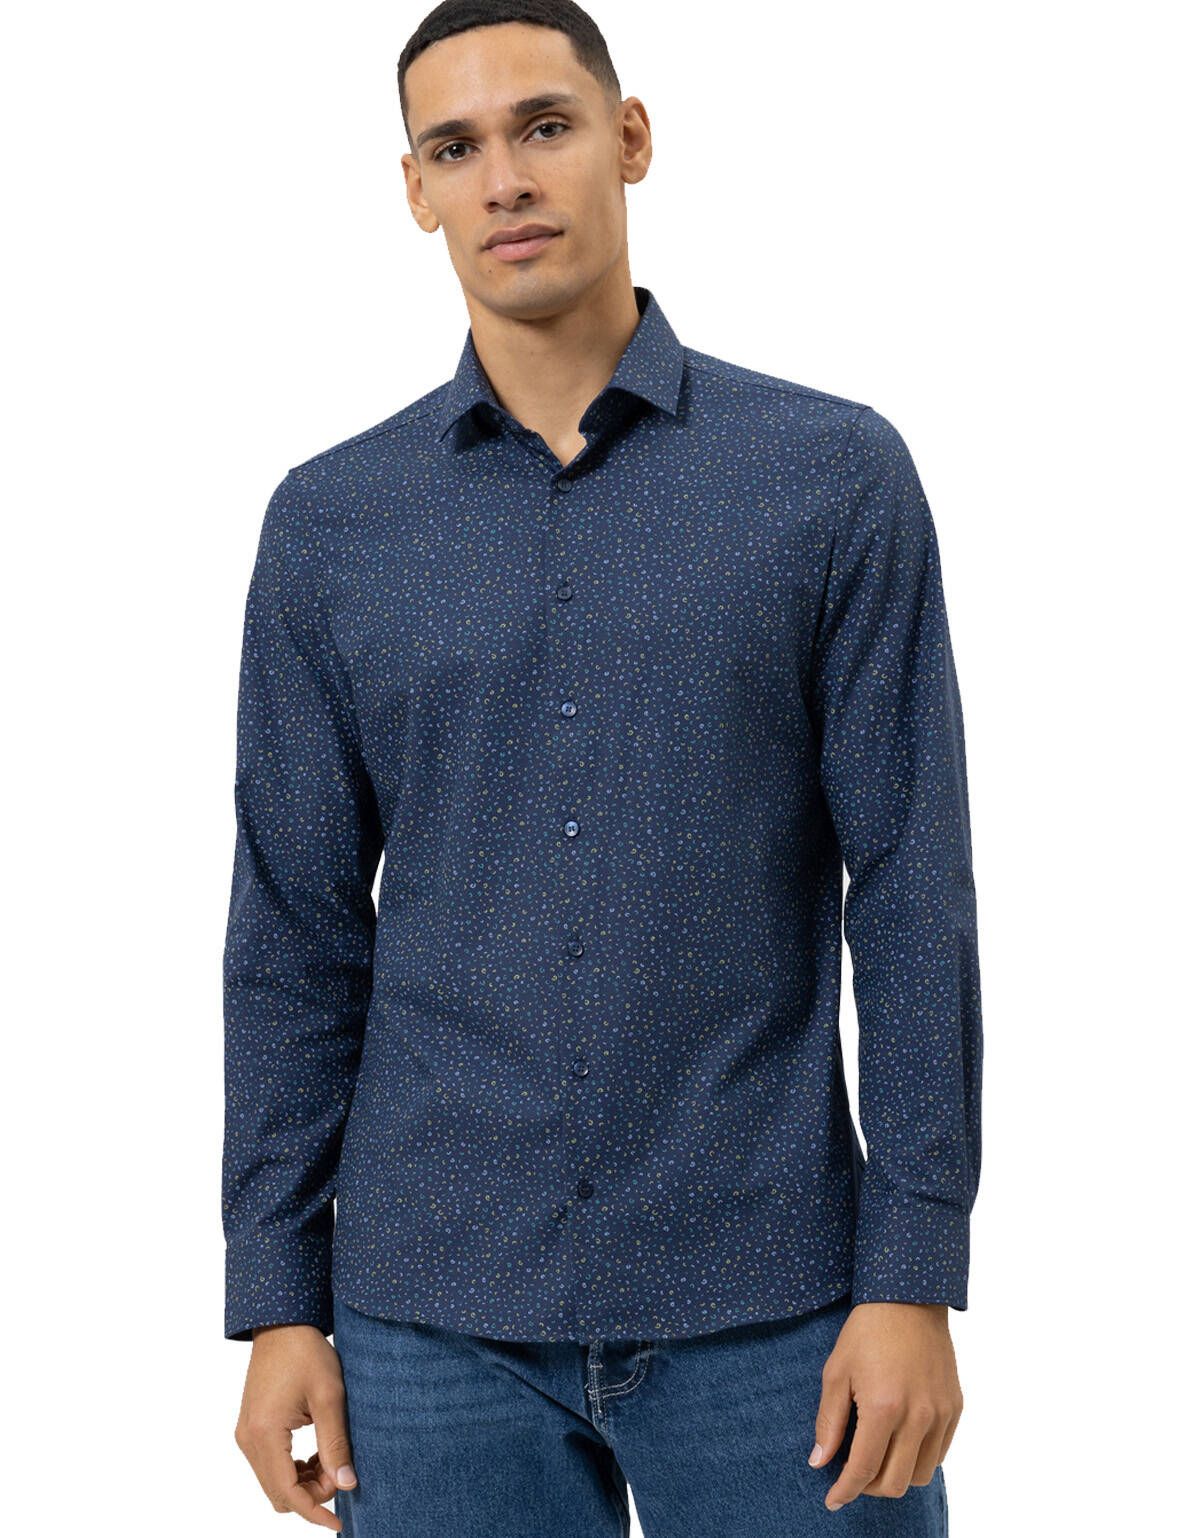 Рубашка мужская синяя OLYMP 24/7, body fit